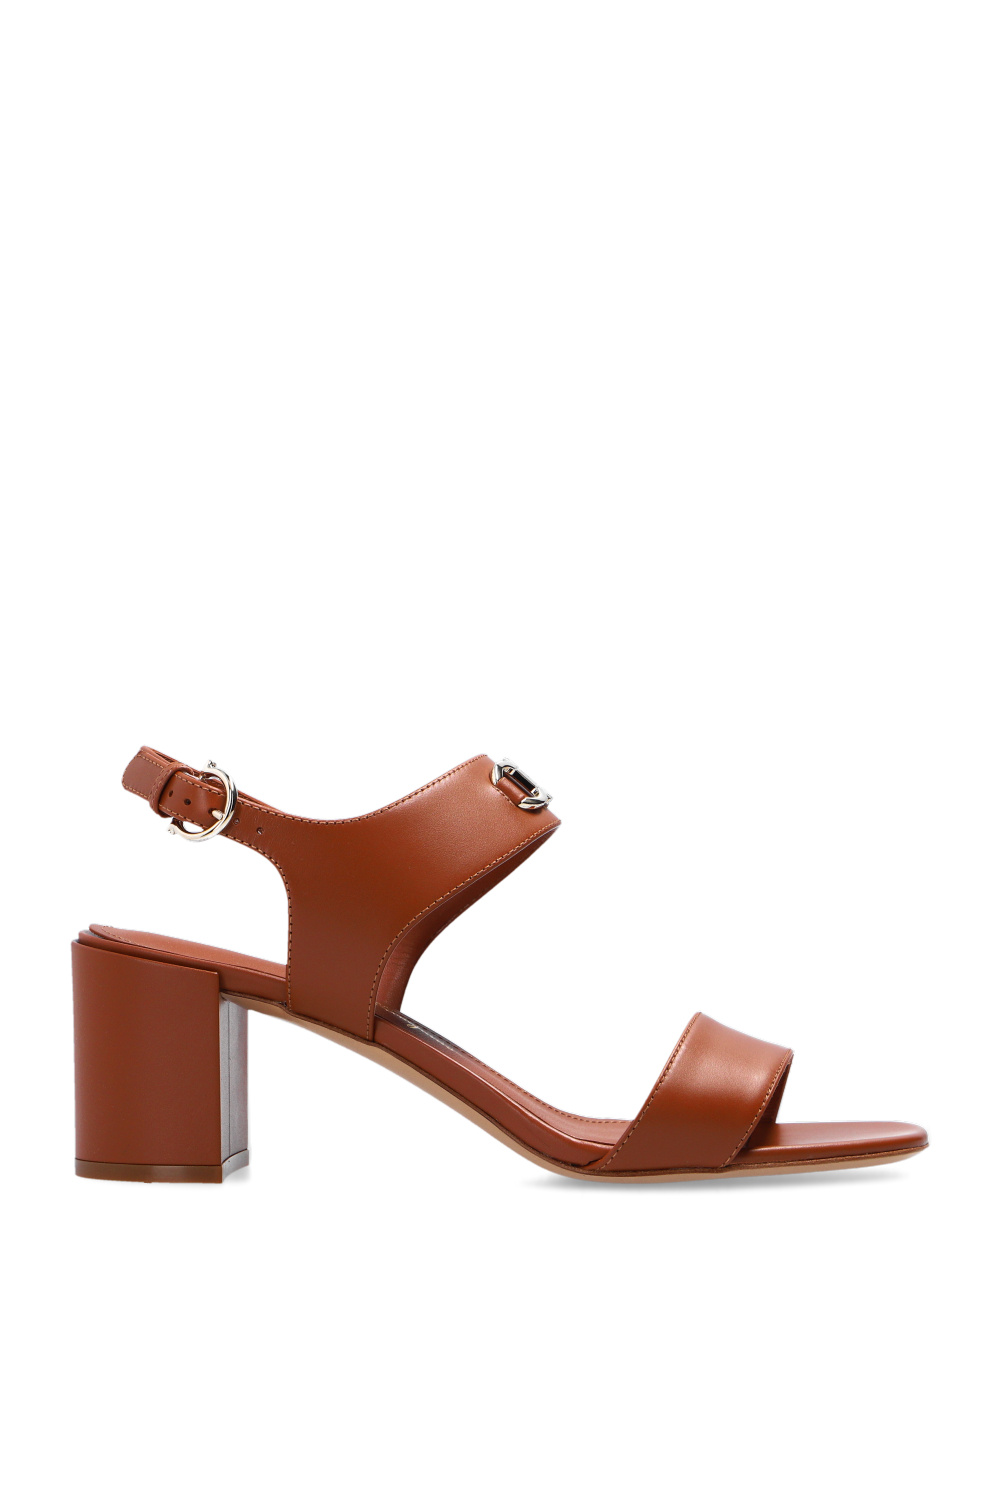 Salvatore Ferragamo ‘Cayla’ heeled sandals